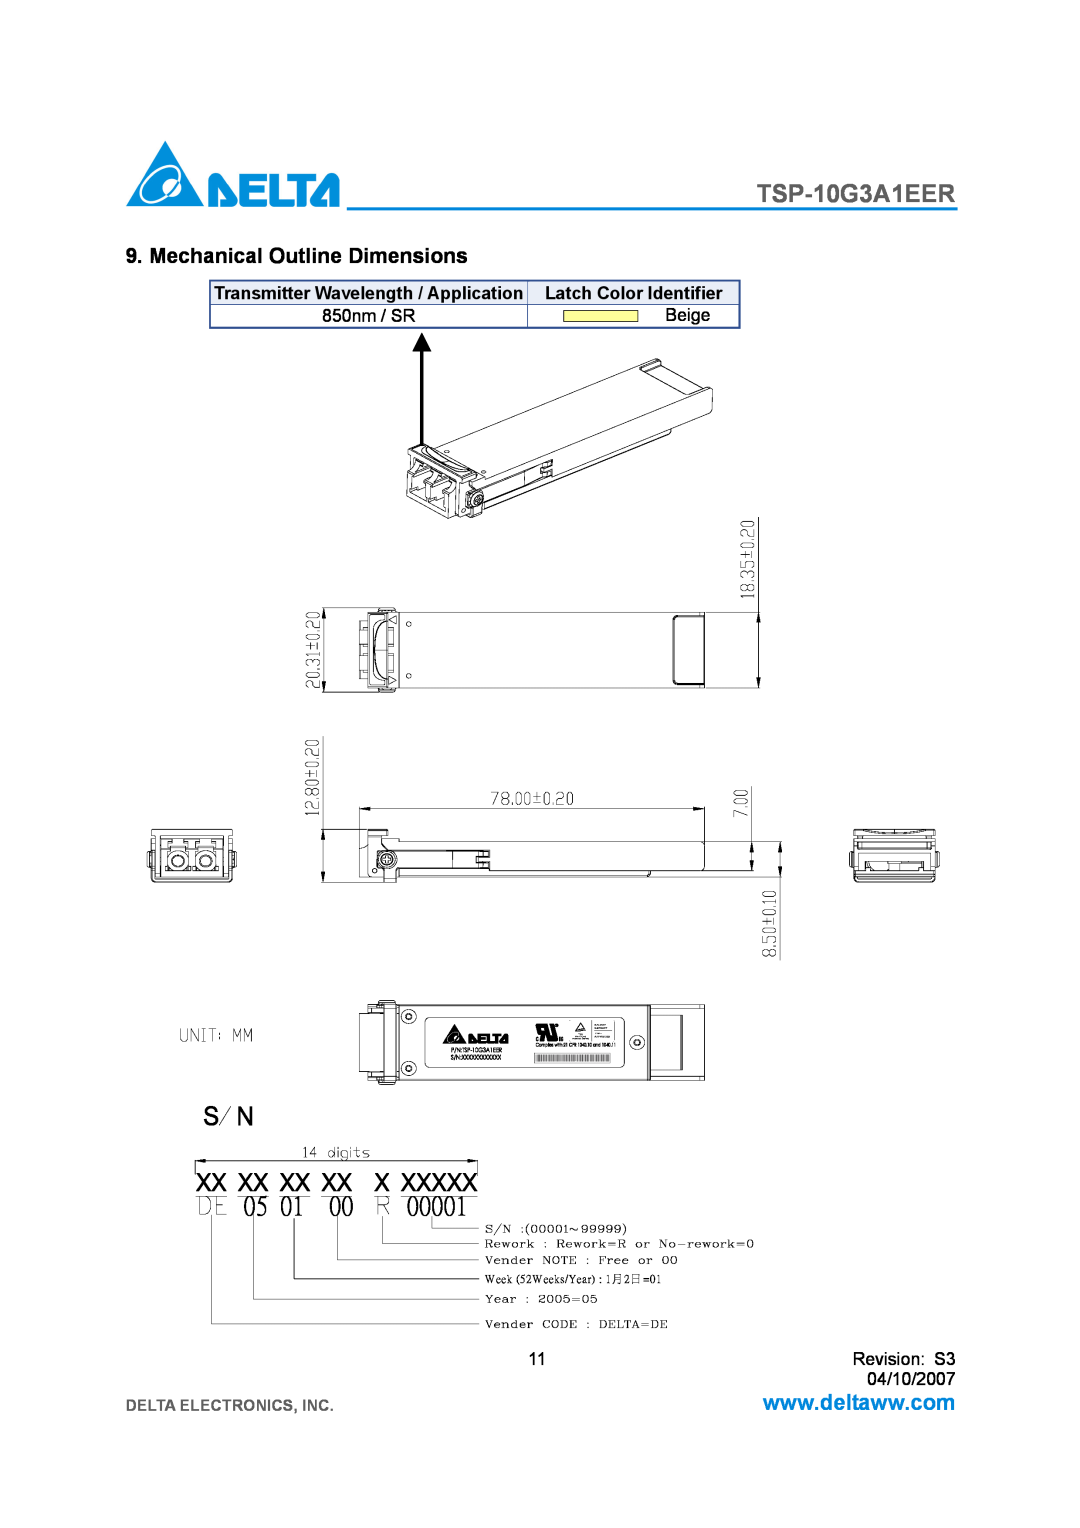 Delta Electronics TSP-10G3A1EER manual Mechanical Outline Dimensions, Transmitter Wavelength / Application, 850nm / SR 